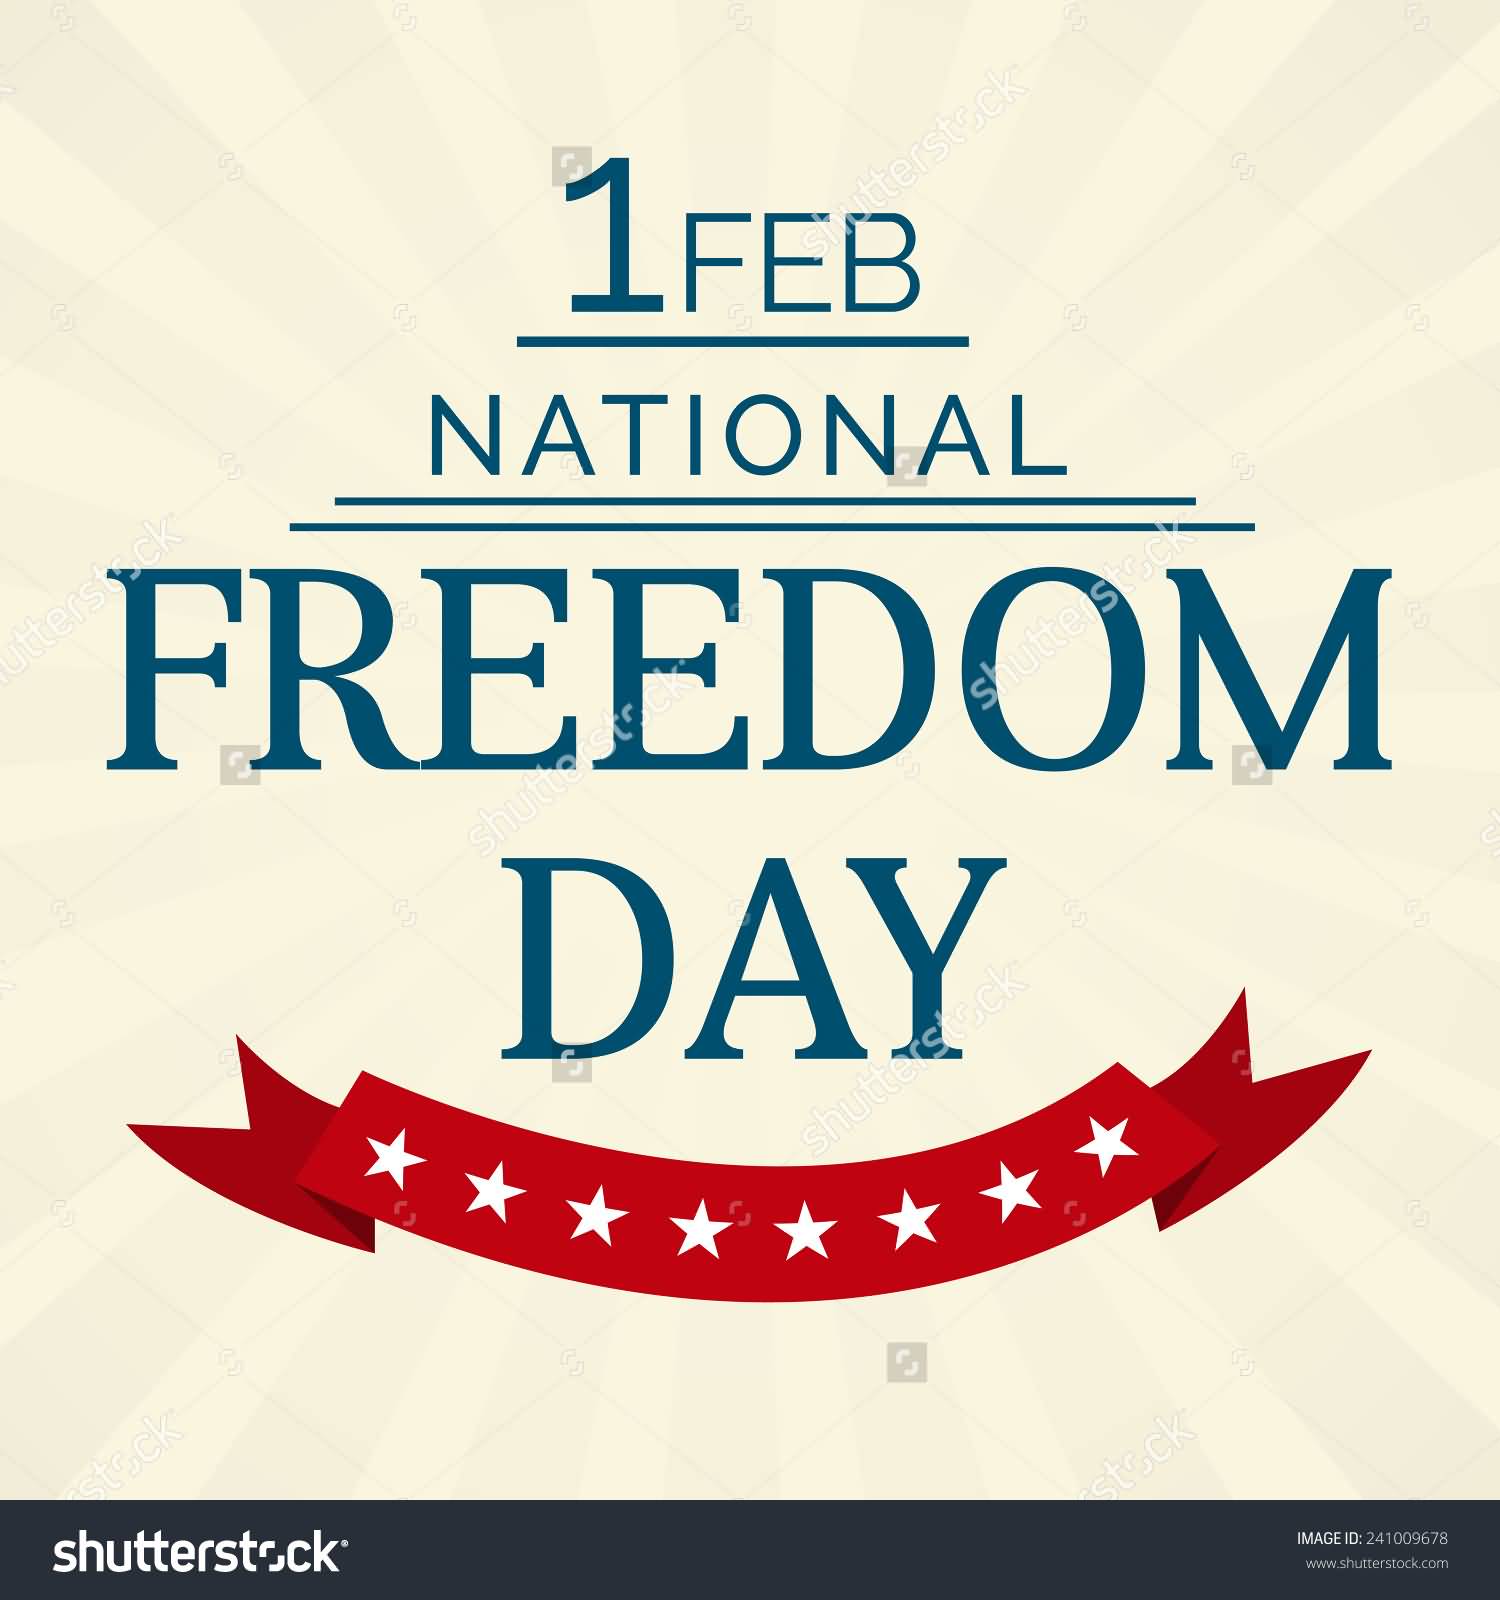 1-Feb-National-Freedom-Day-Illustration.jpg